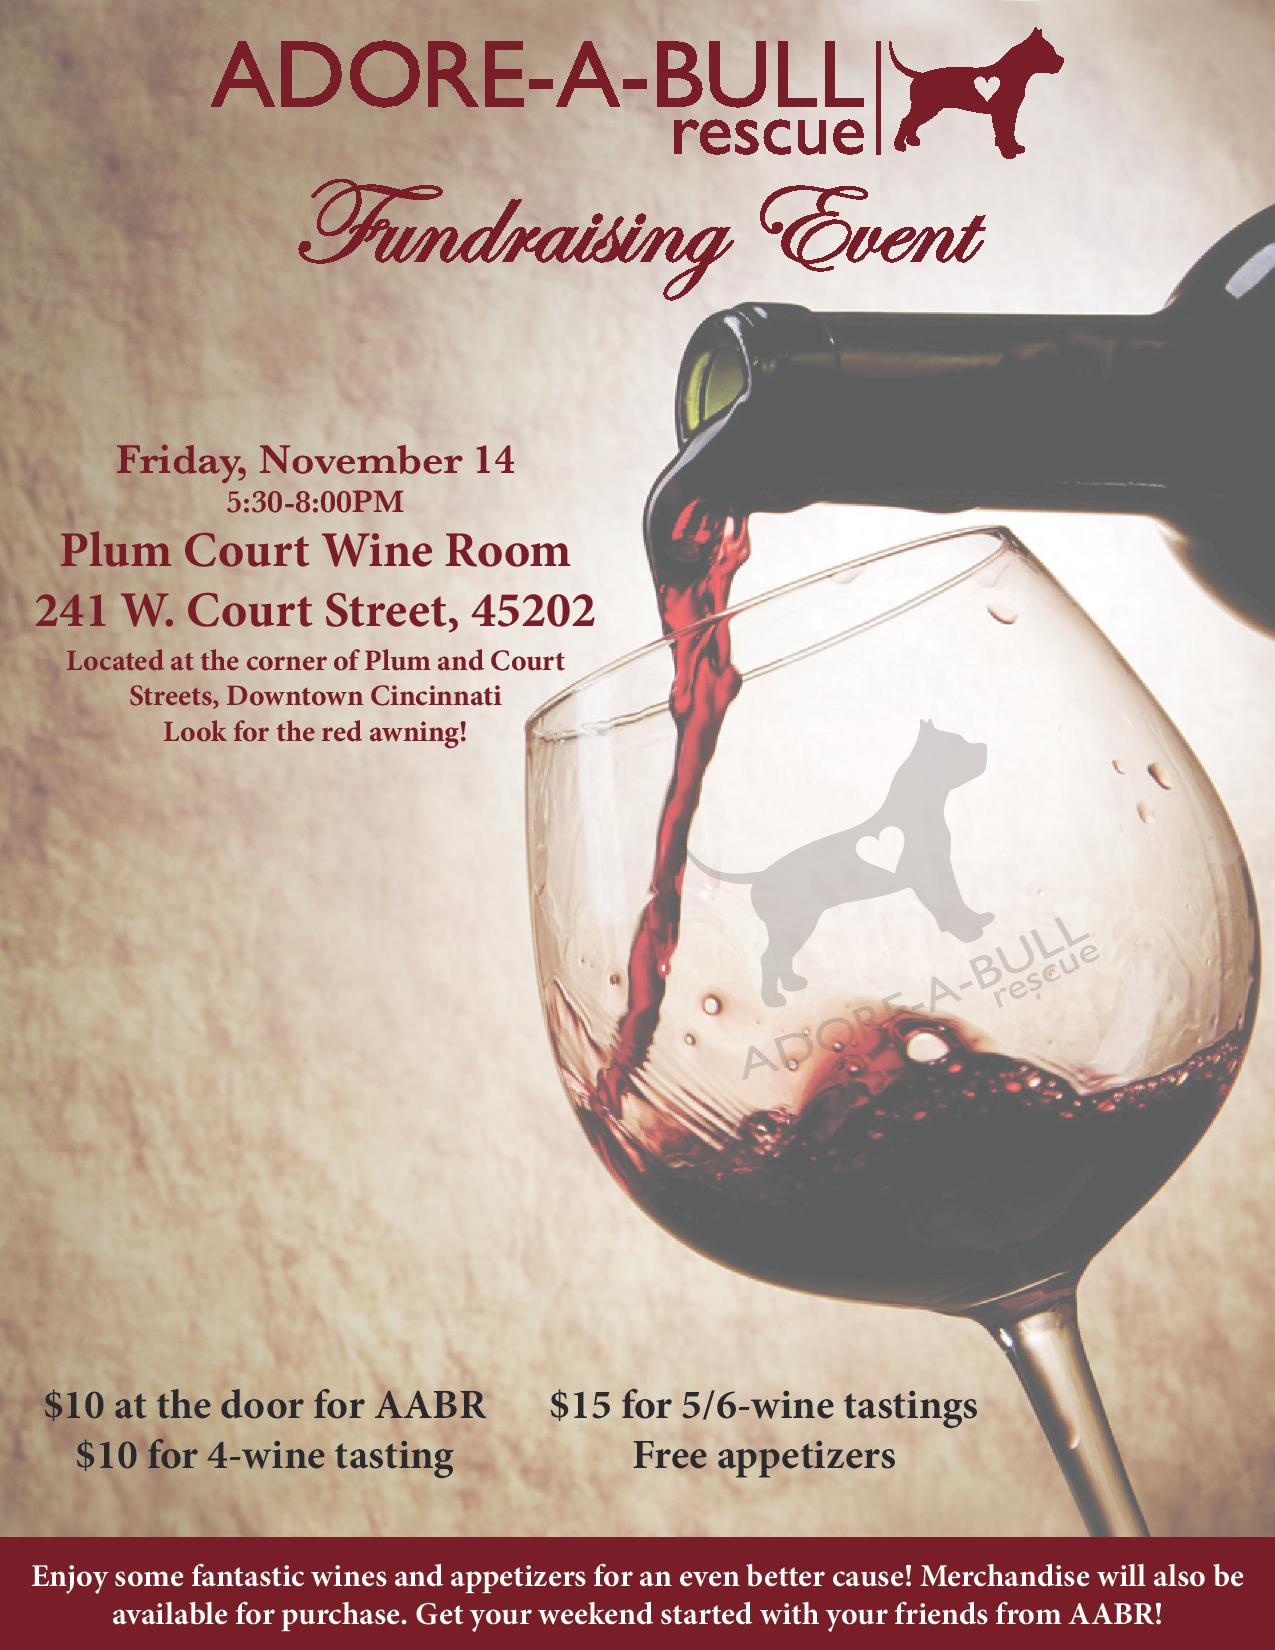 Wine Tasting Happy Hour Fundraiser – Adore-A-Bull Rescue